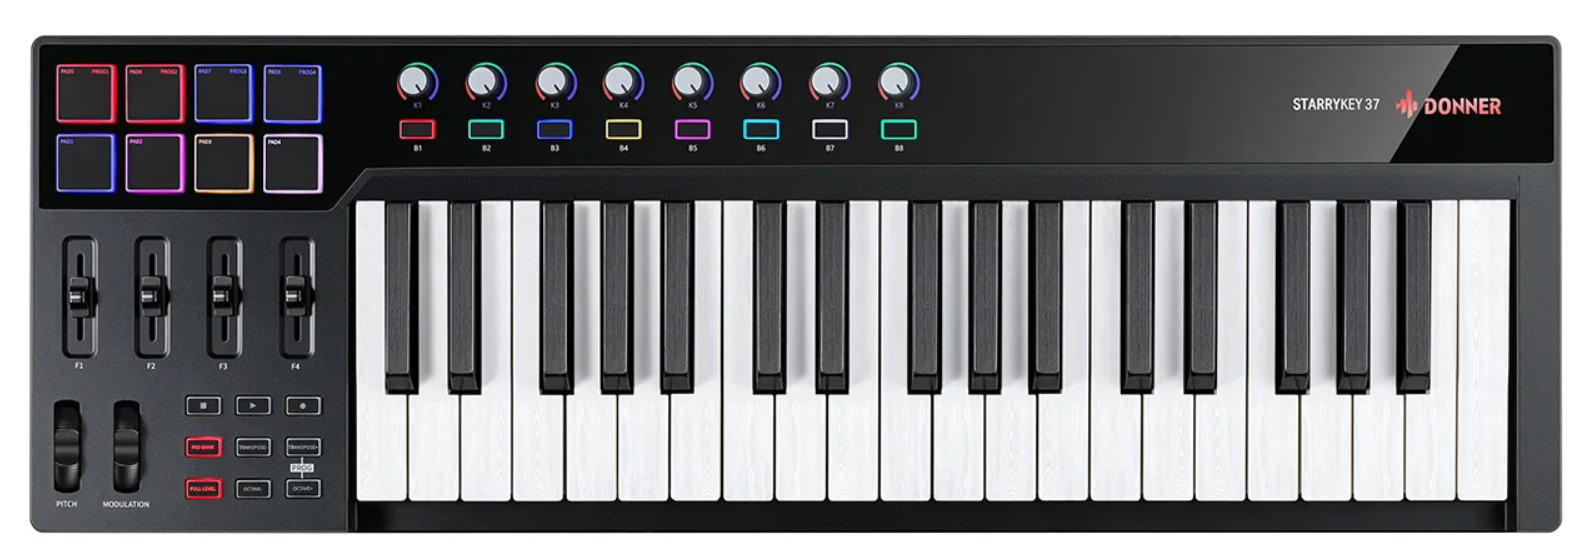 MIDI клавиатуры Donner D-37 midi клавиатуры donner n 32